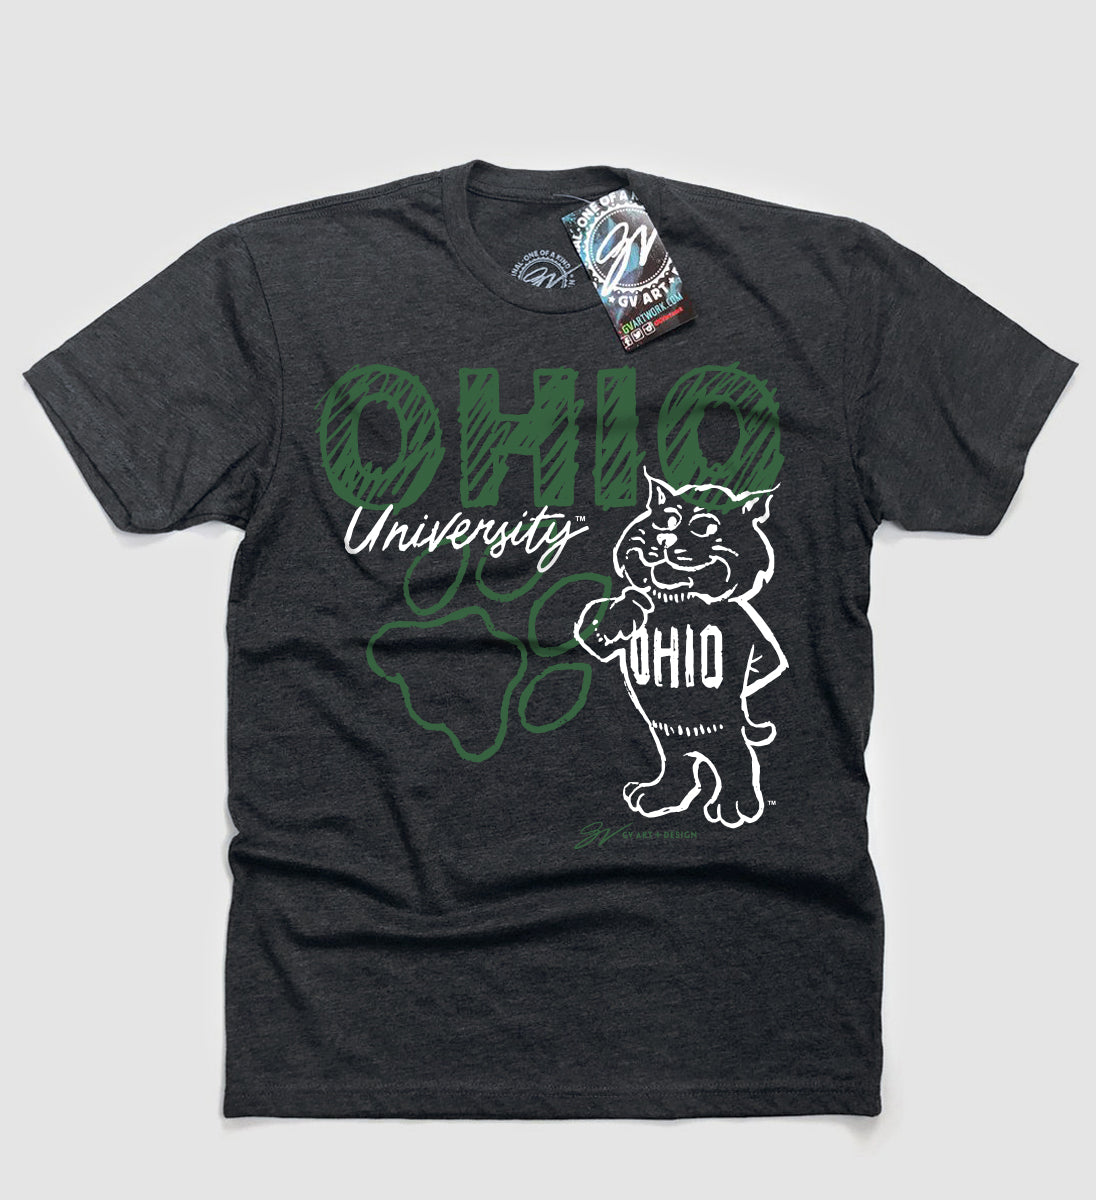 Ohio University Bobcat T shirt